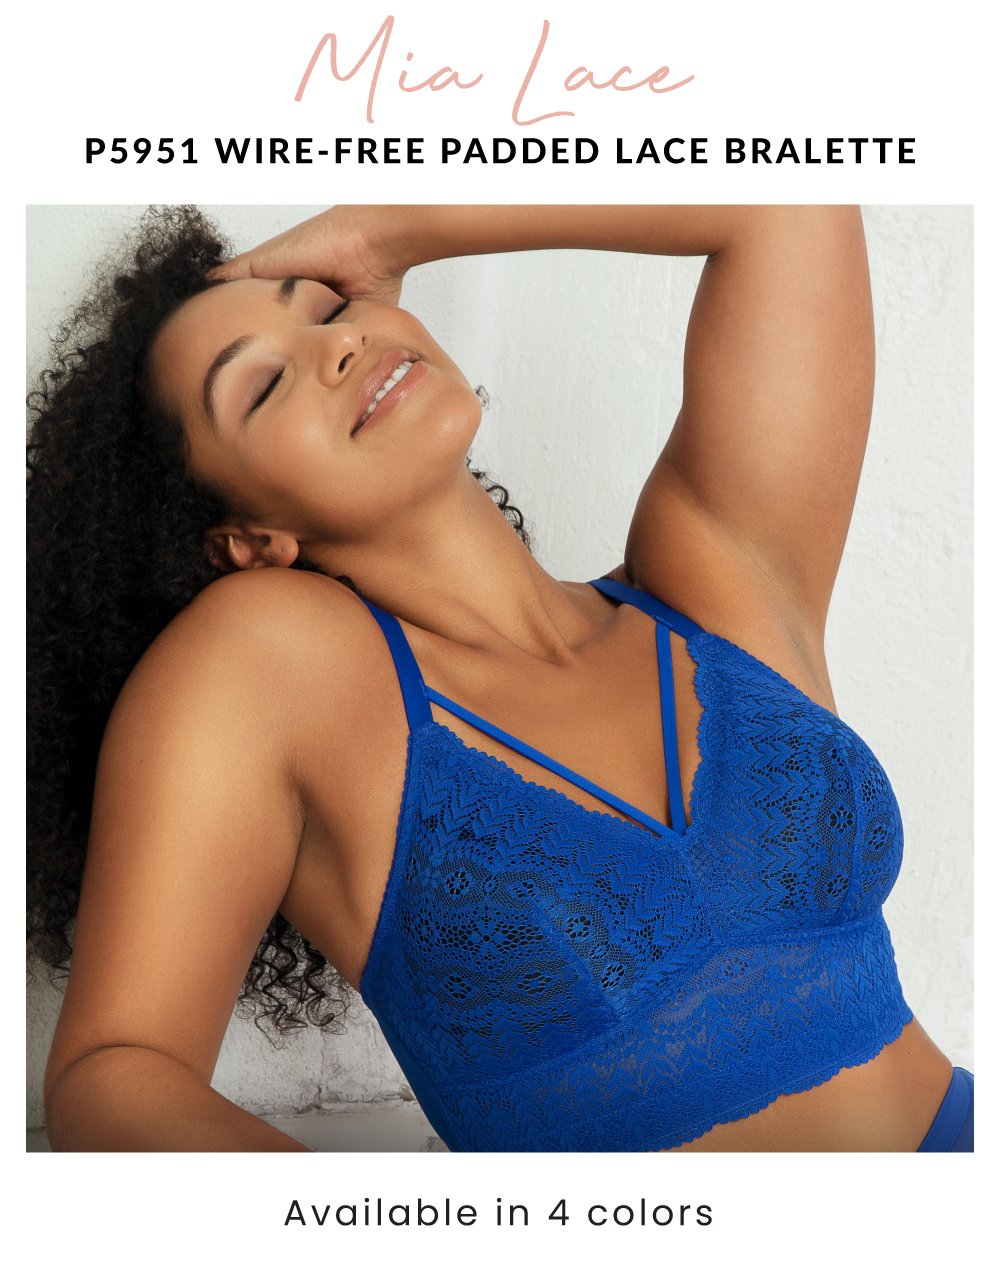 Parfait Lingerie: PARFAIT's # 1 Lace Wire-free Bra in Stunning Sapphire